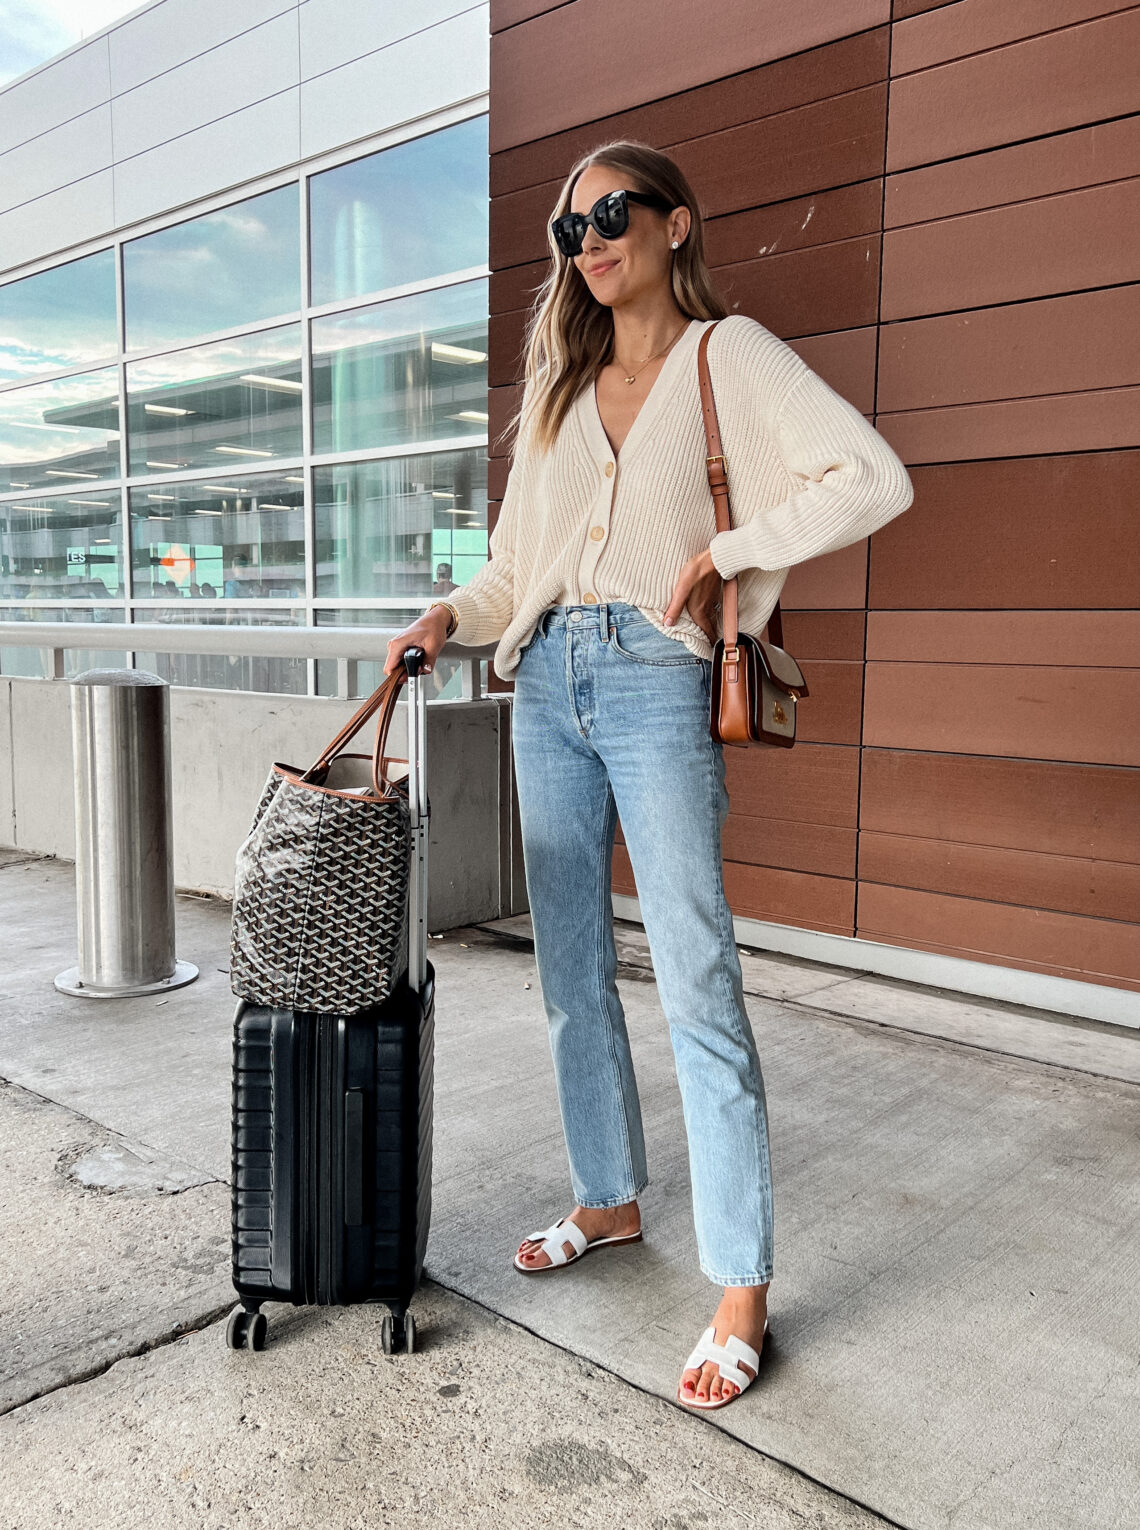 Fashion Jackson Wearing Jenni Kayne Cotton Cardigan AGOLDE Lana Jeans Hermes White Sandals Travel Outfit Amazon Luggage Goyard Tote